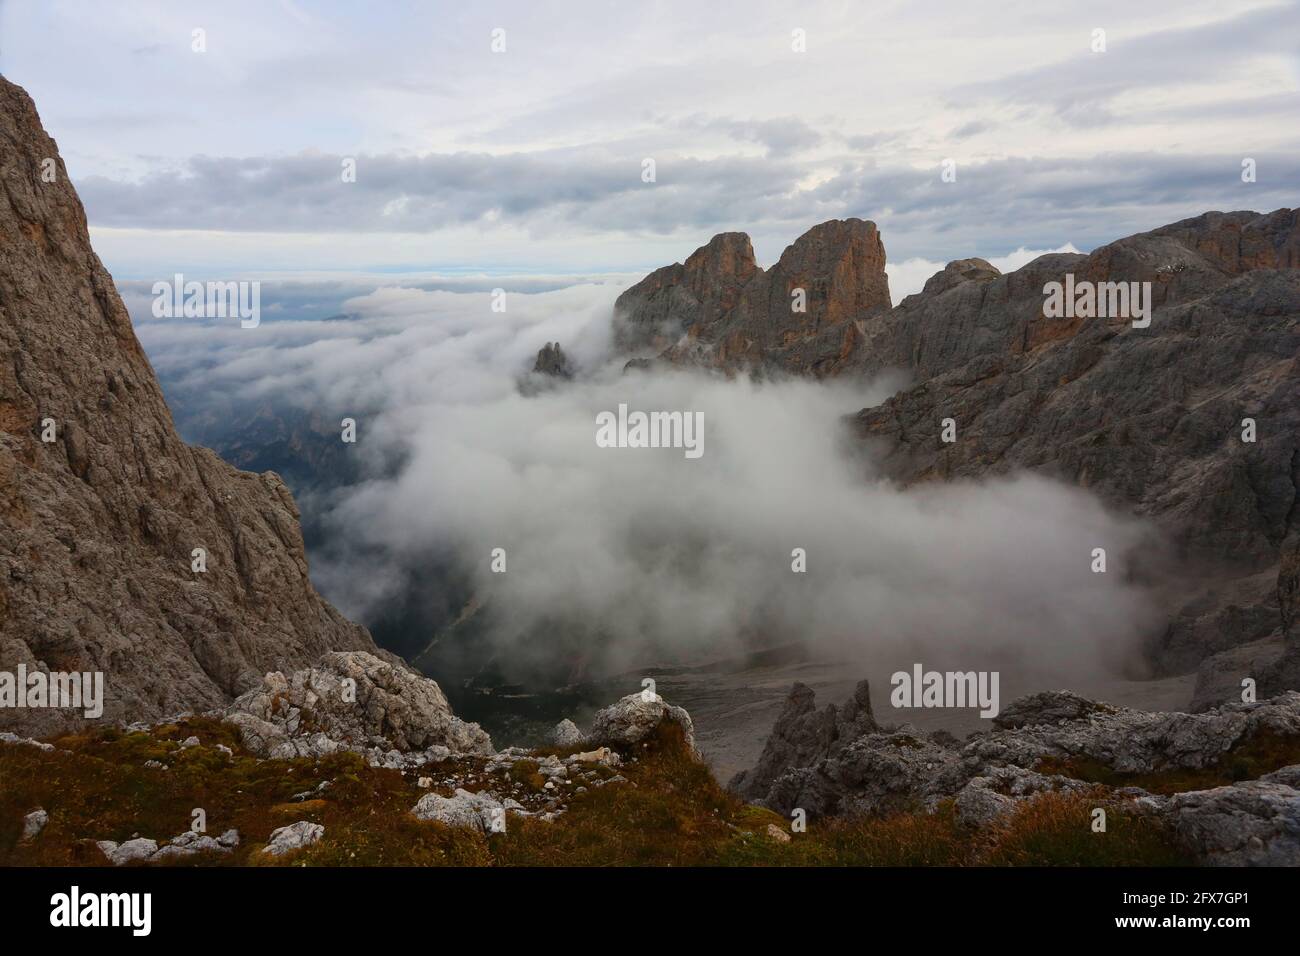 Herbst am Alpenpass Passo di Rolle mit dem Gipfel der Cima di Vezzana in Trentino in den Dolomiten in Italien Foto Stock